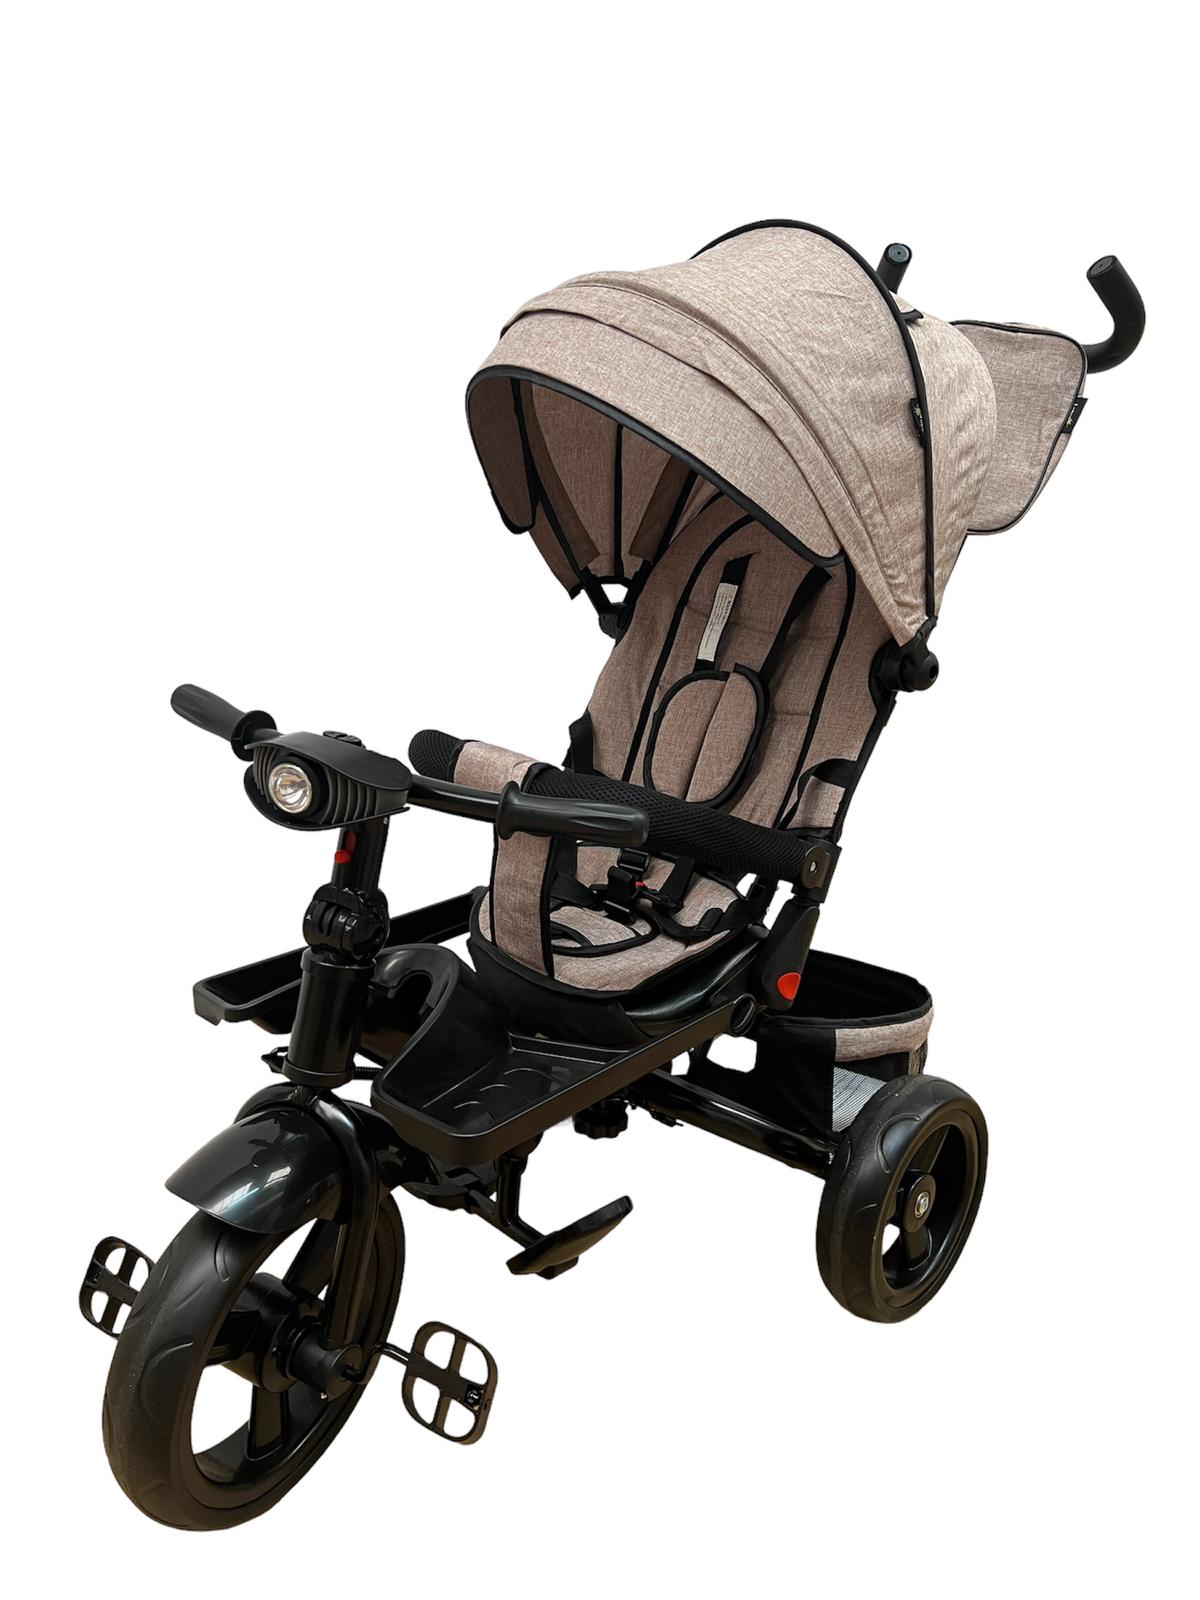 Tricicleta cu scaun reversibil, roti din EVA, pozitie de somn, cu muzica si lumini SL02